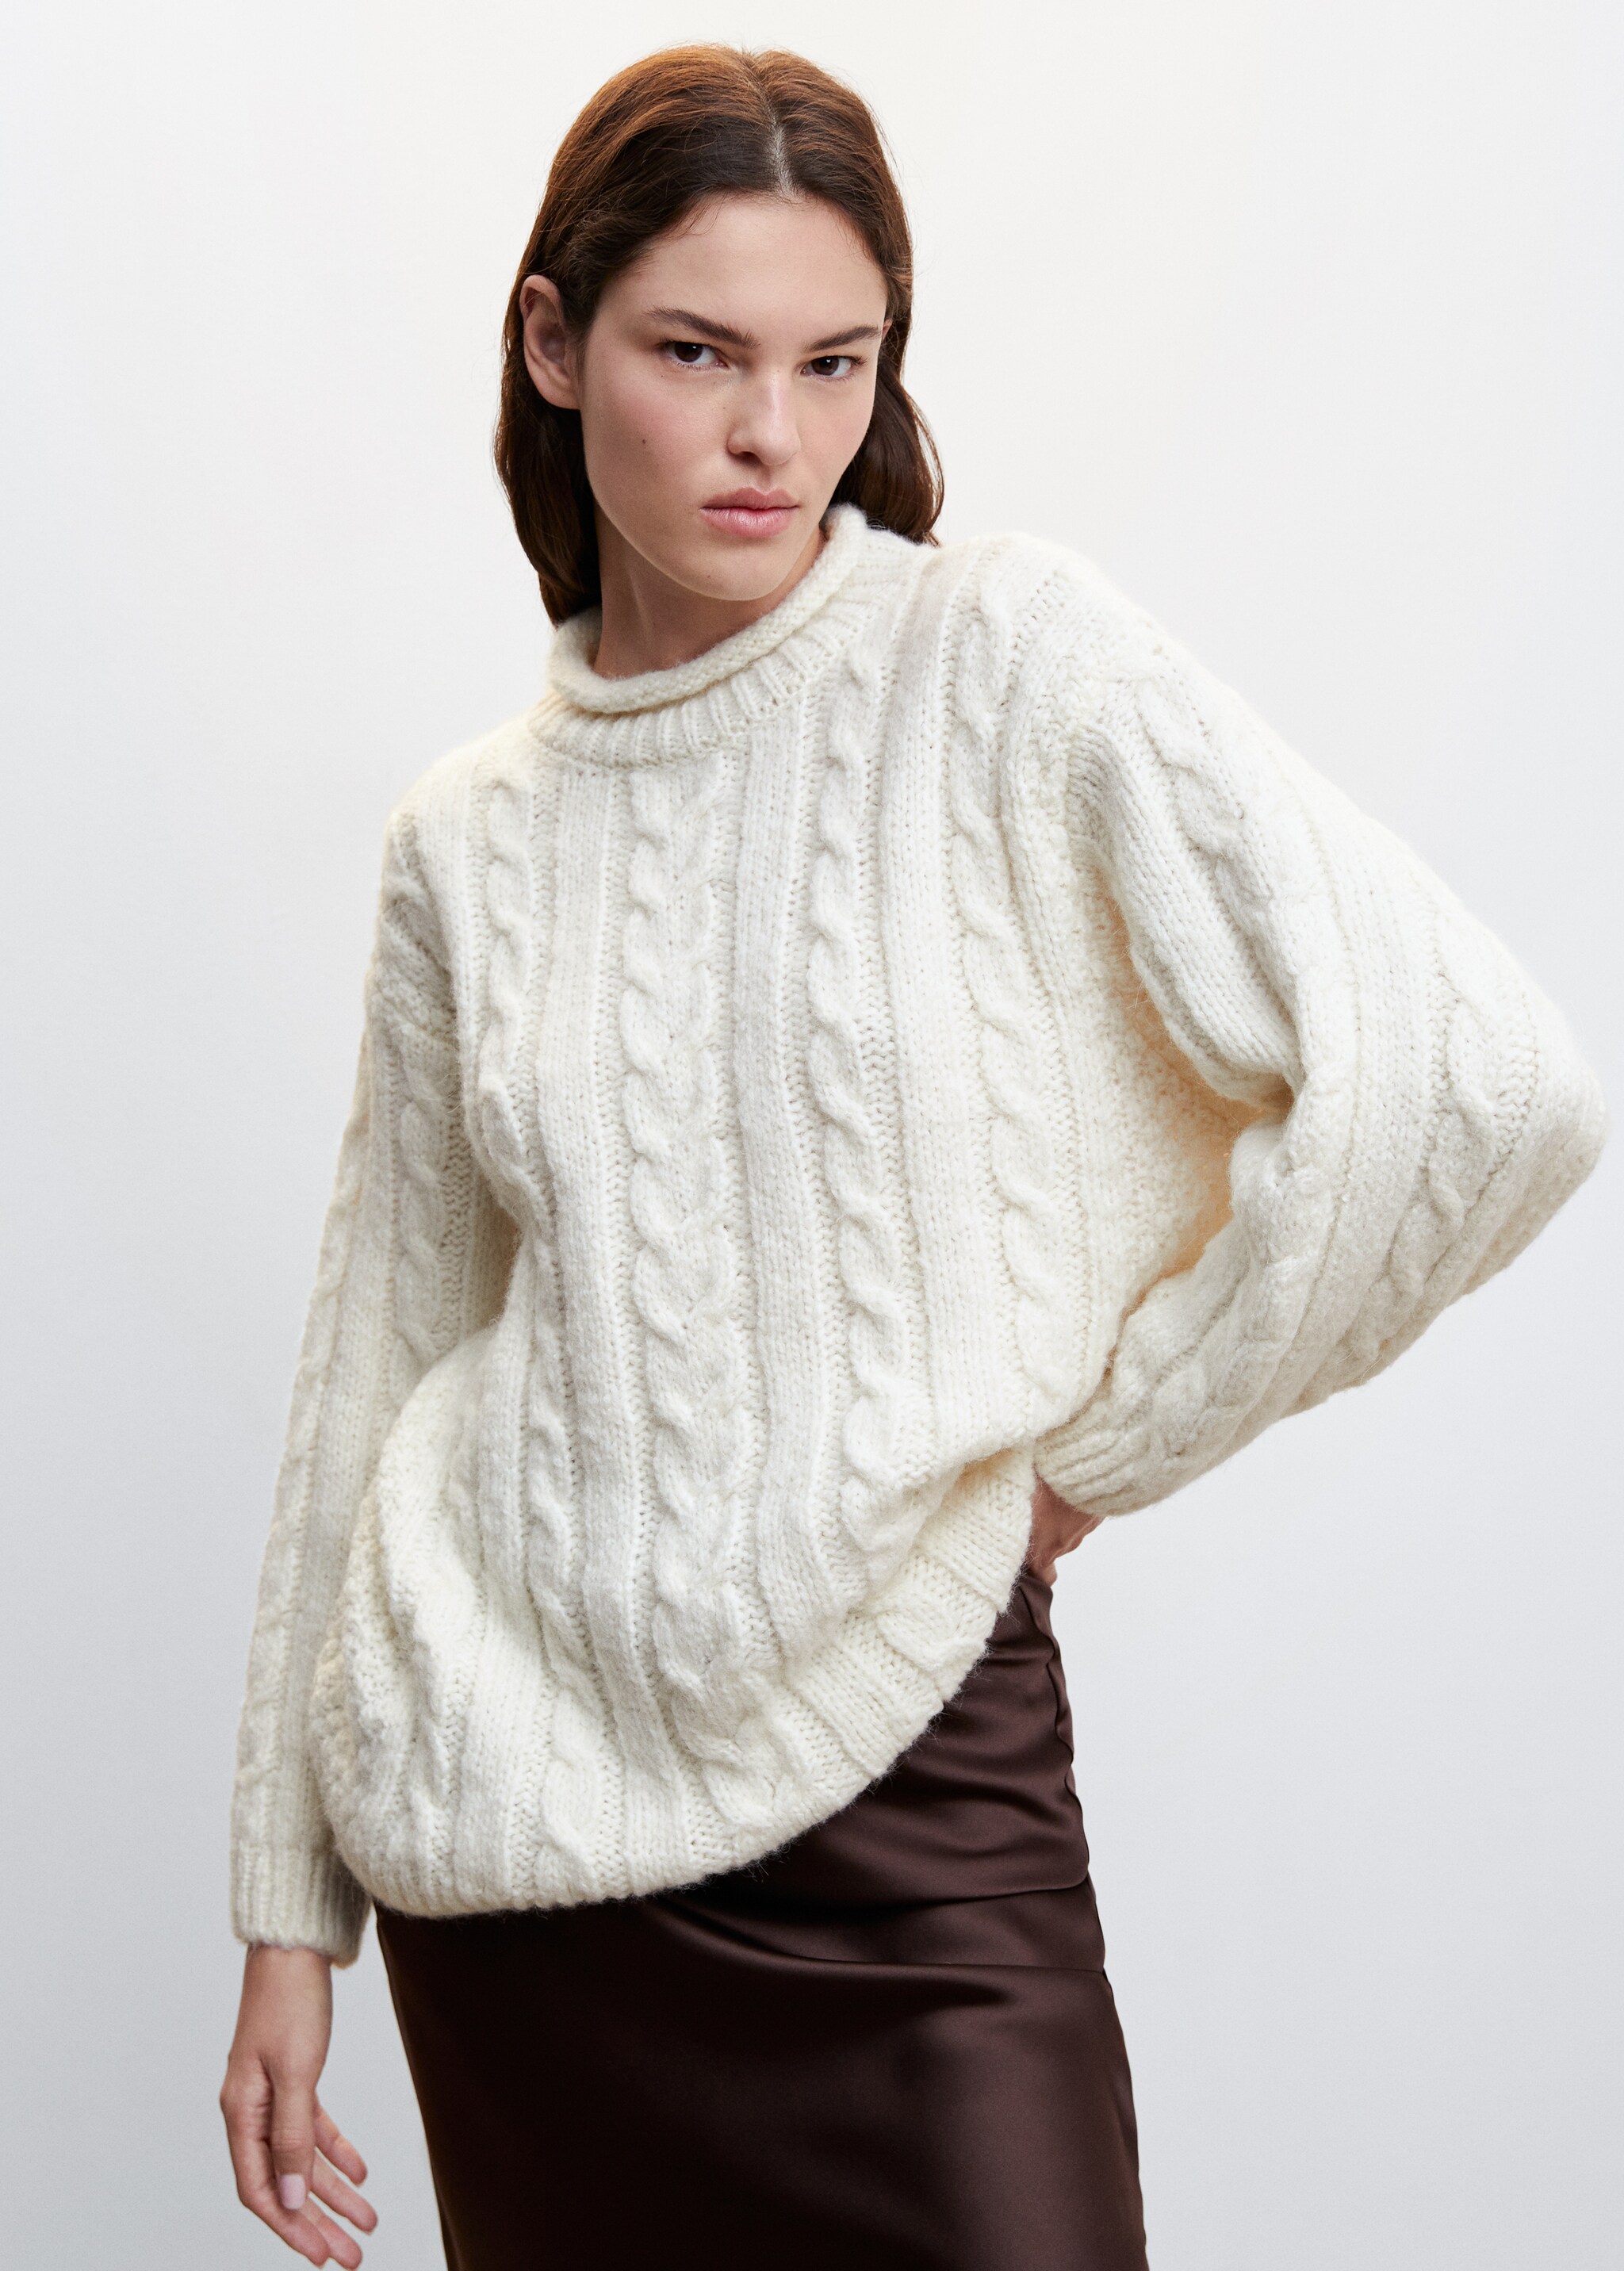 Braided wool sweater - Medium plane